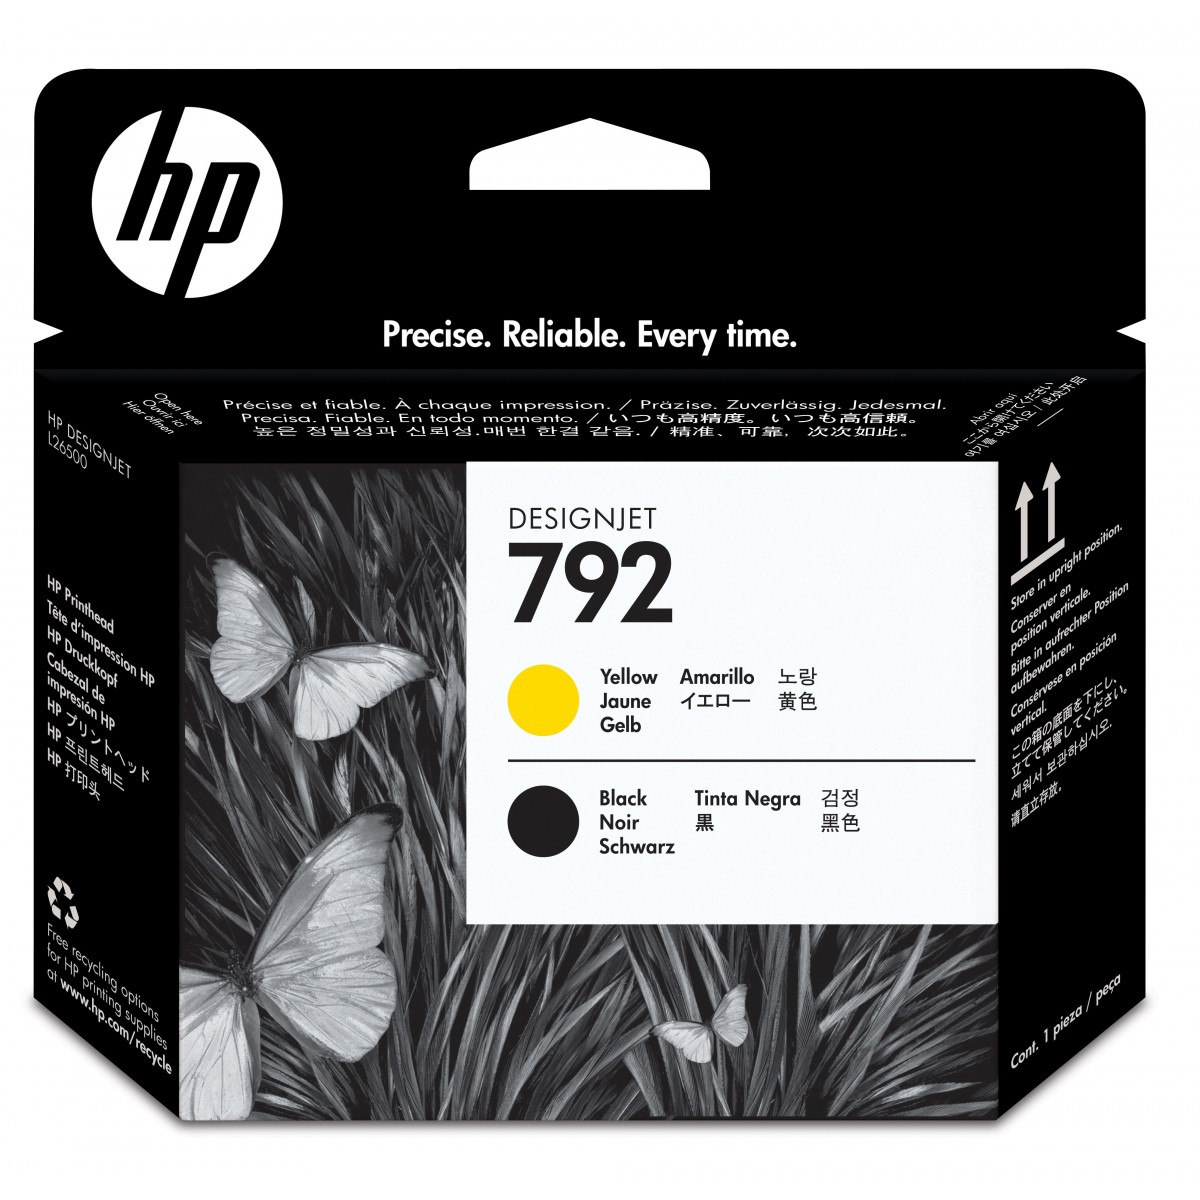 HP 792 Yellow/Black Latex Printhead - HP Designjet L26500 Printer series - Inkjet - Black - Yellow - CN702A - Singapore - 28 mm